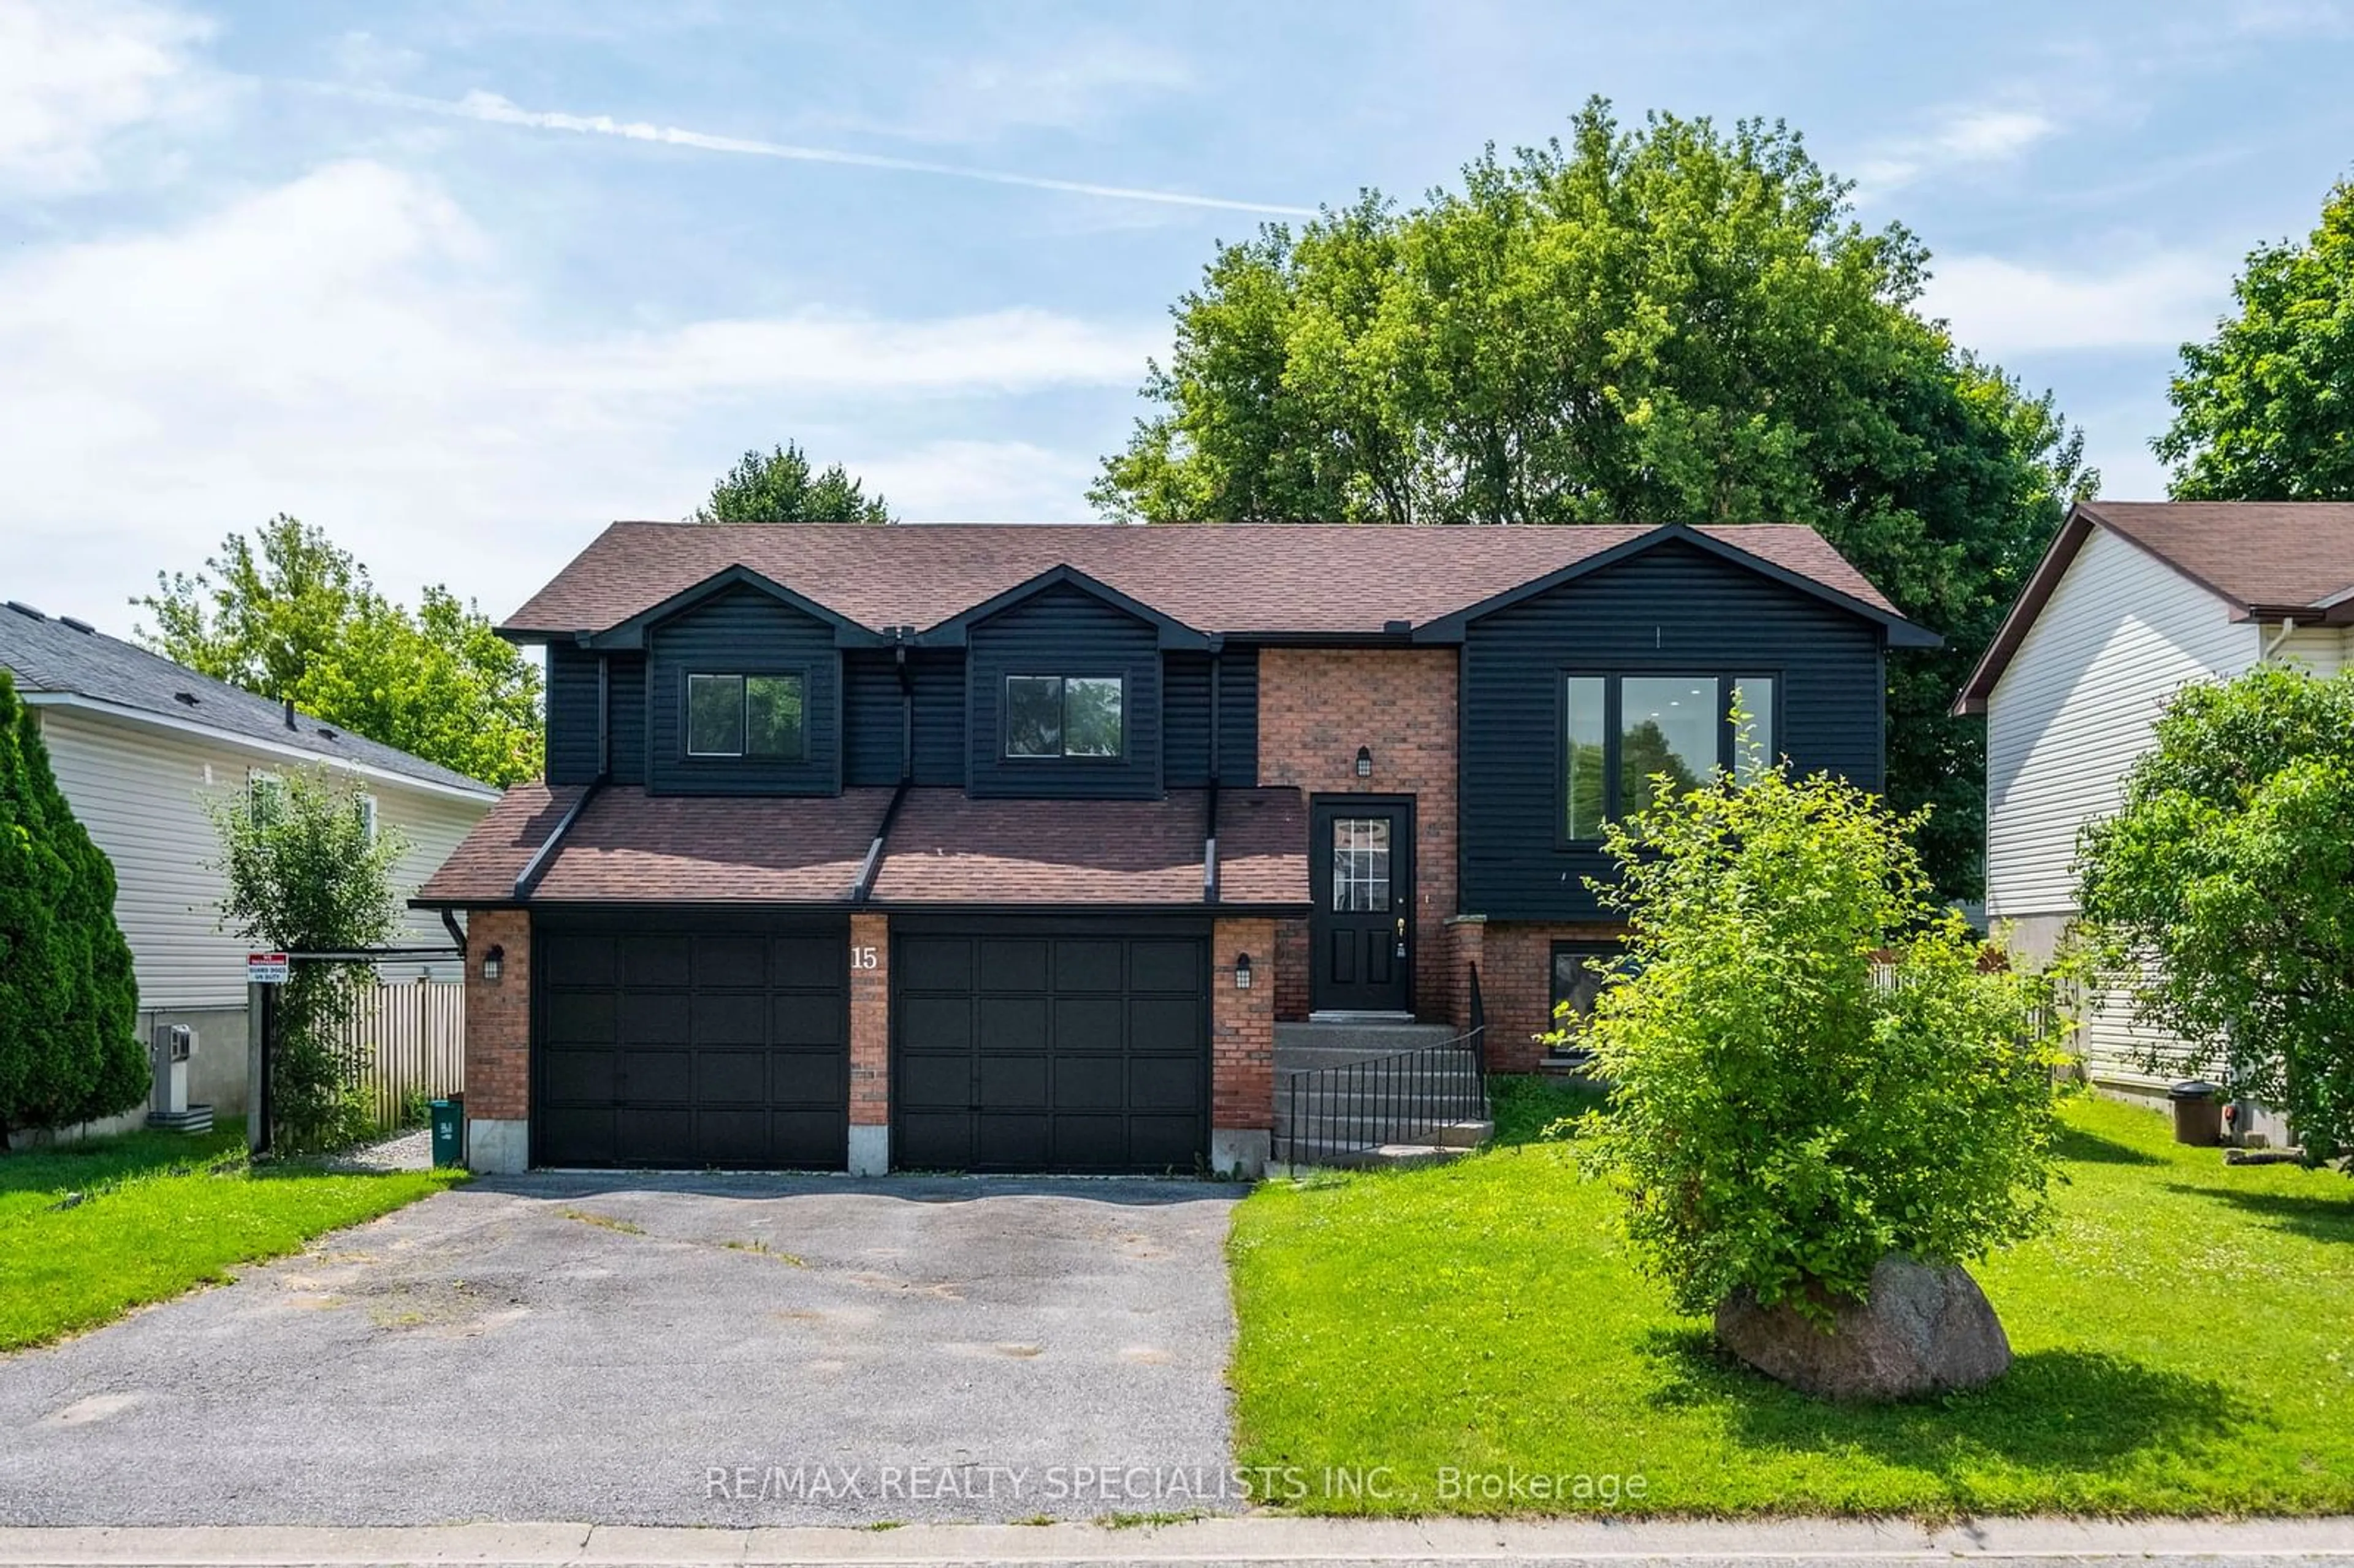 Frontside or backside of a home for 15 Cindy Lee Cres, Orillia Ontario L3V 7P3